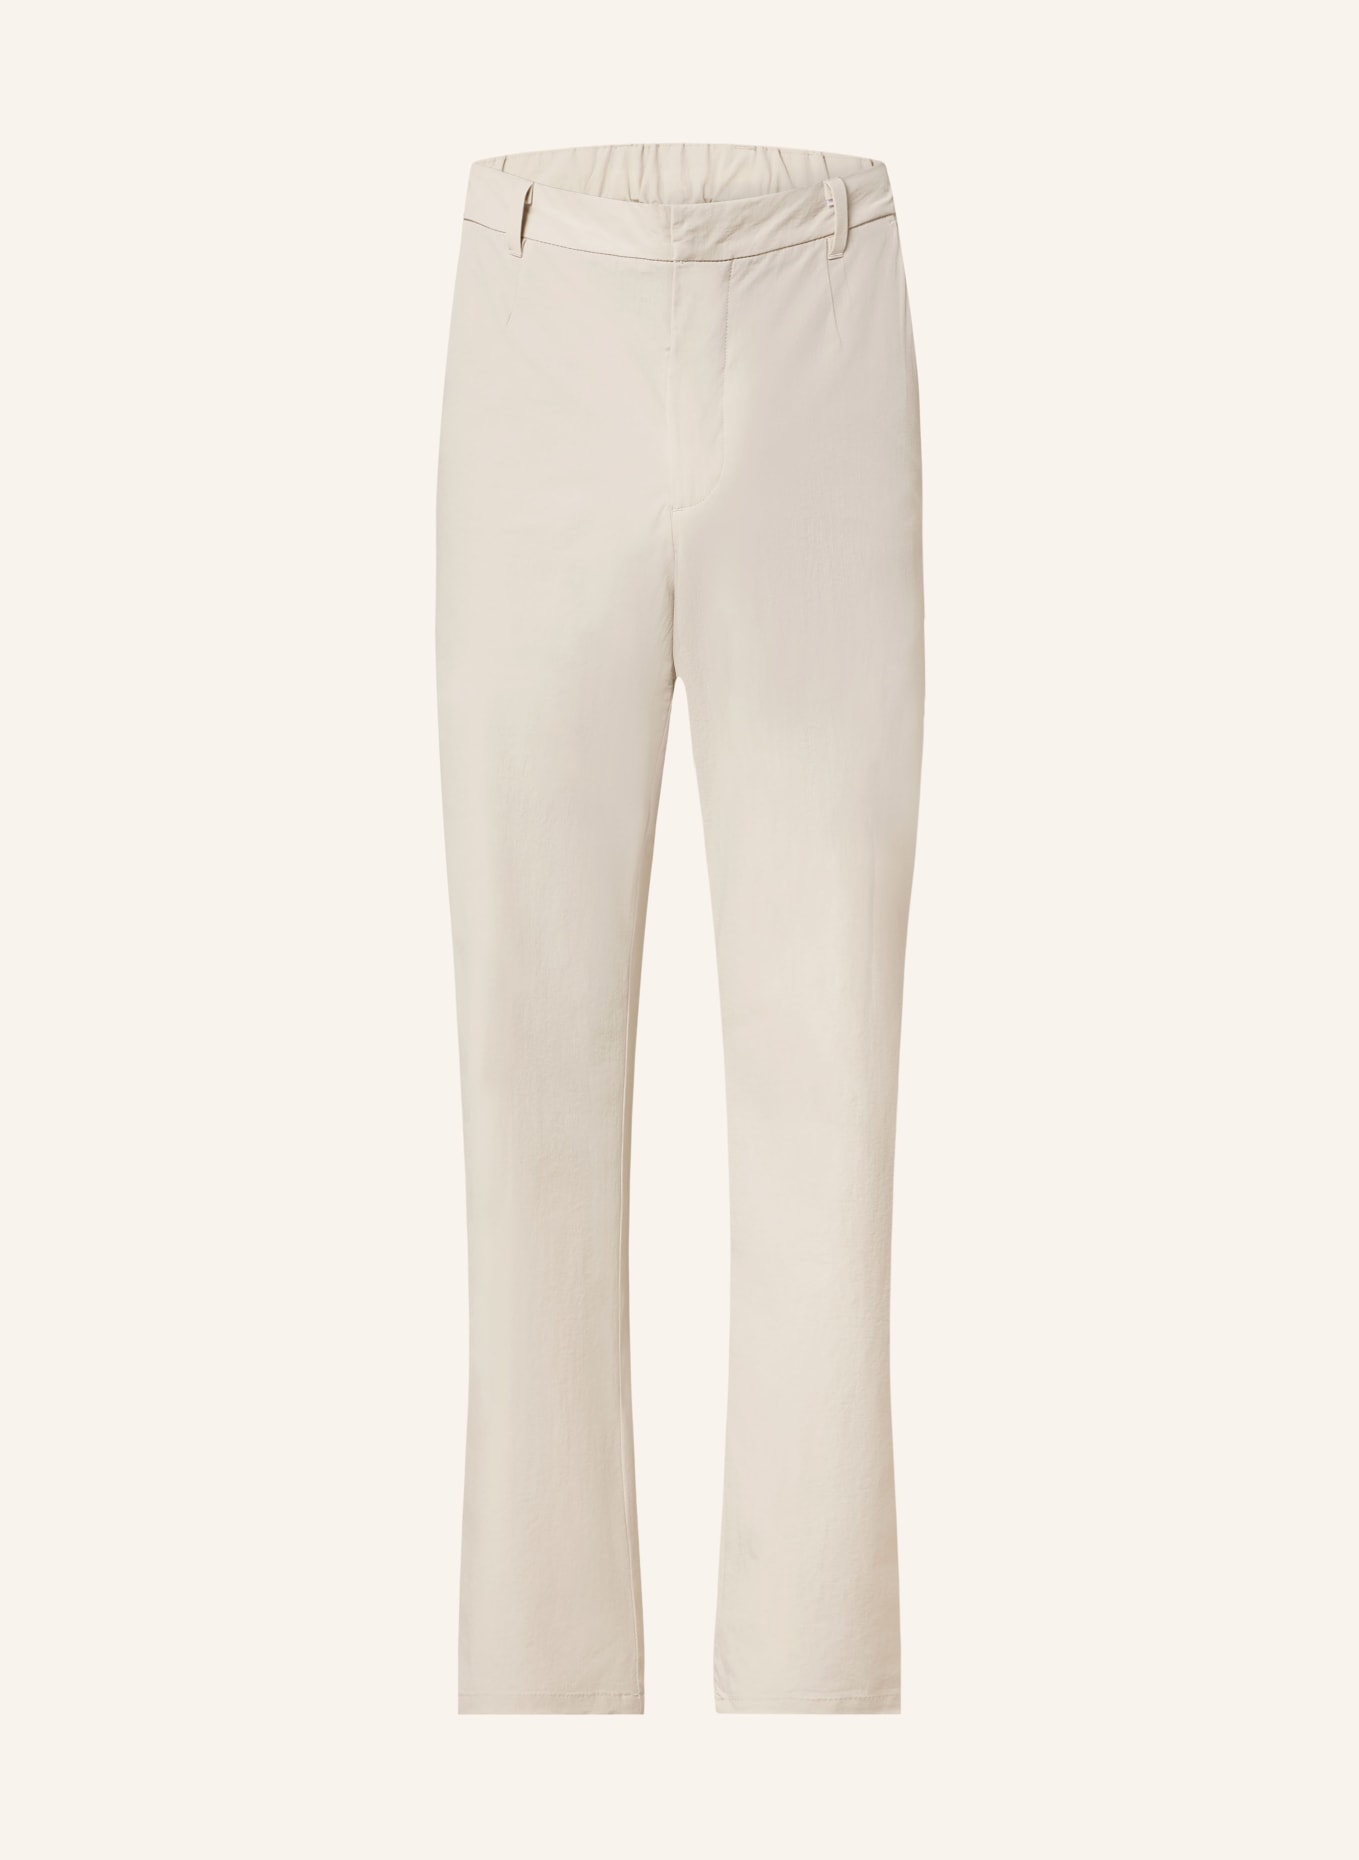 NORSE PROJECTS Anzughose AAREN Regular Fit, Farbe: 0920 Light Khaki (Bild 1)